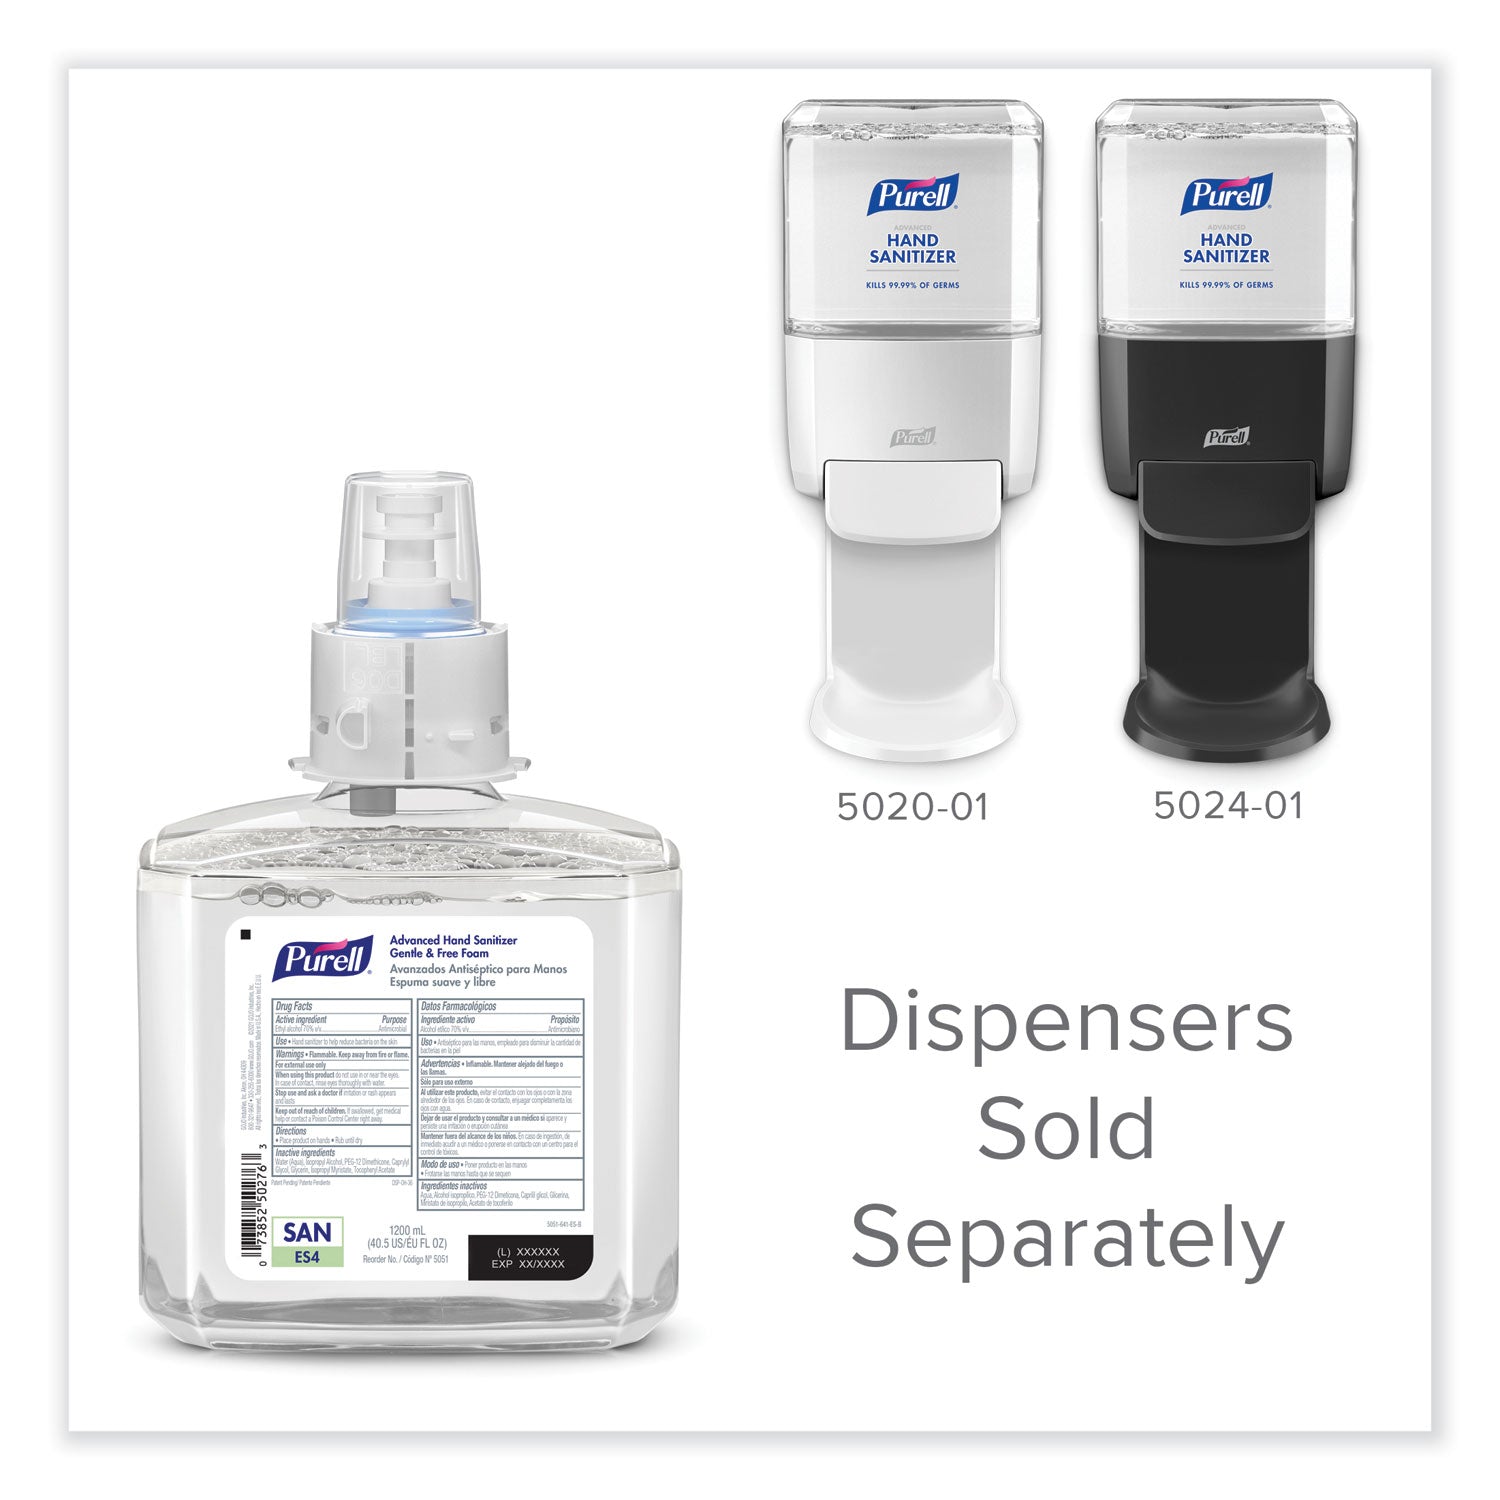 advanced-hand-sanitizer-gentle-and-free-foam-1200-ml-refill-fragrance-free-for-es4-dispensers-2-carton_goj505102 - 8